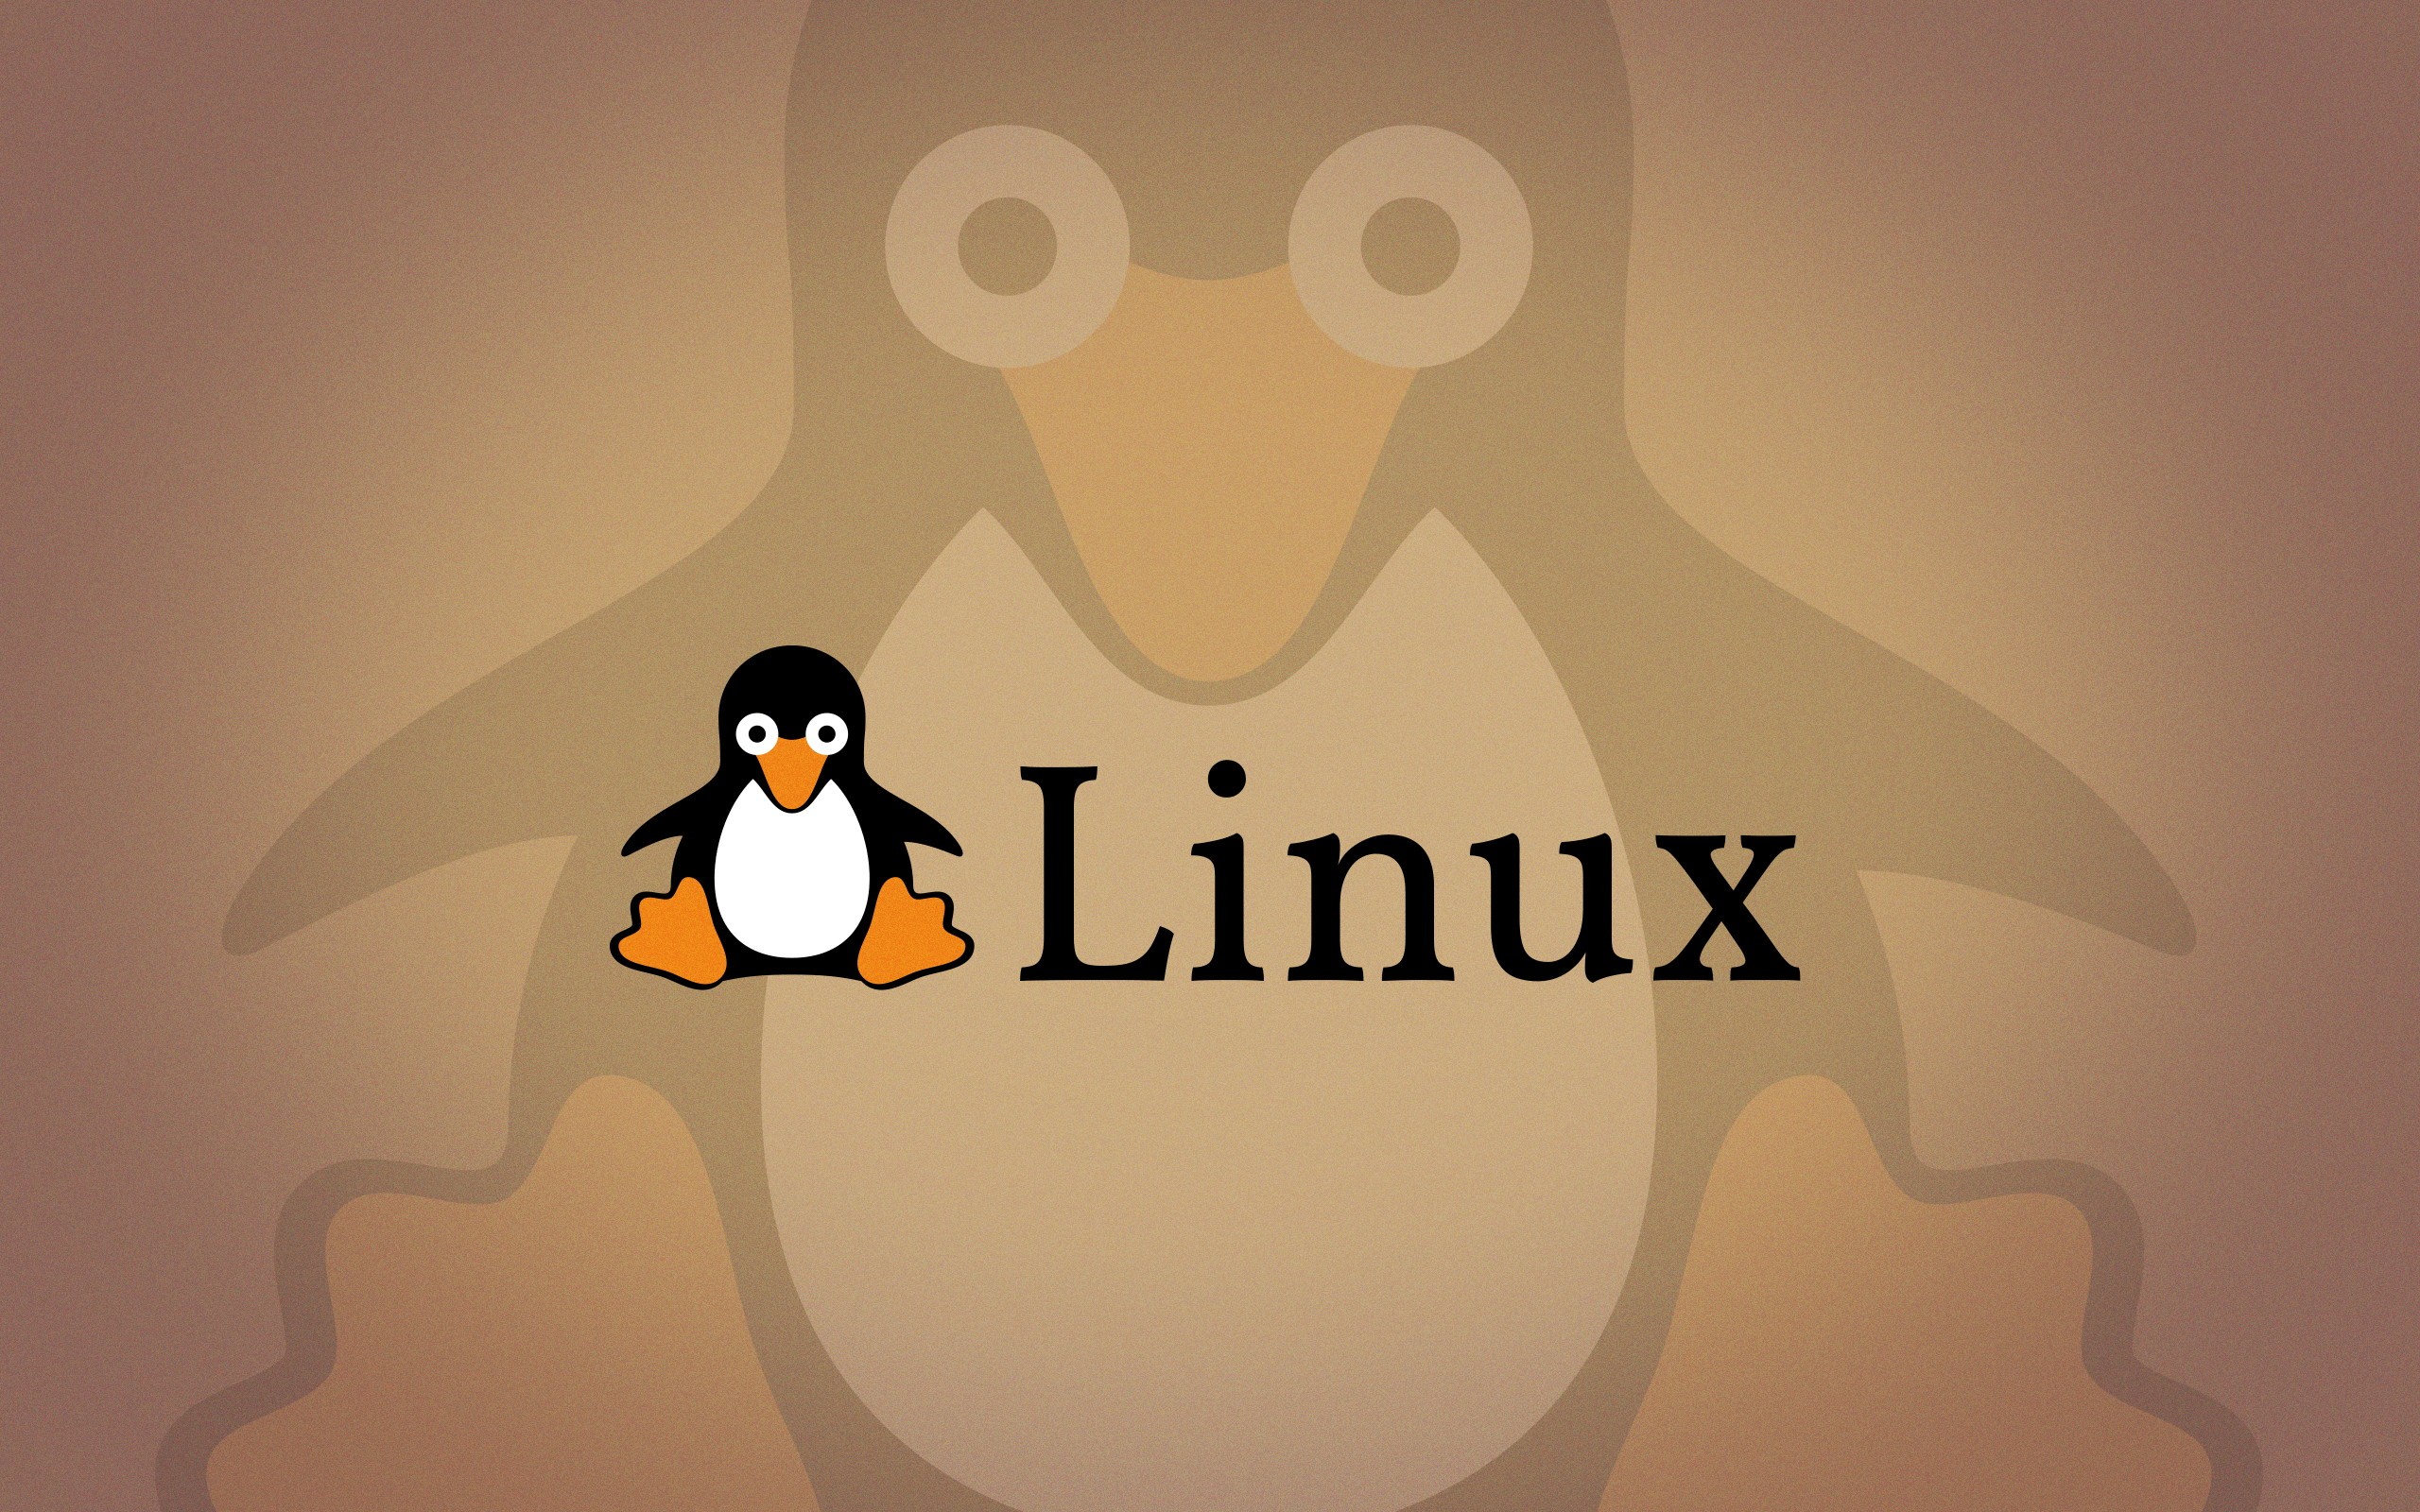 General 2560x1600 Linux Tux penguins open source logo operating system computer digital art